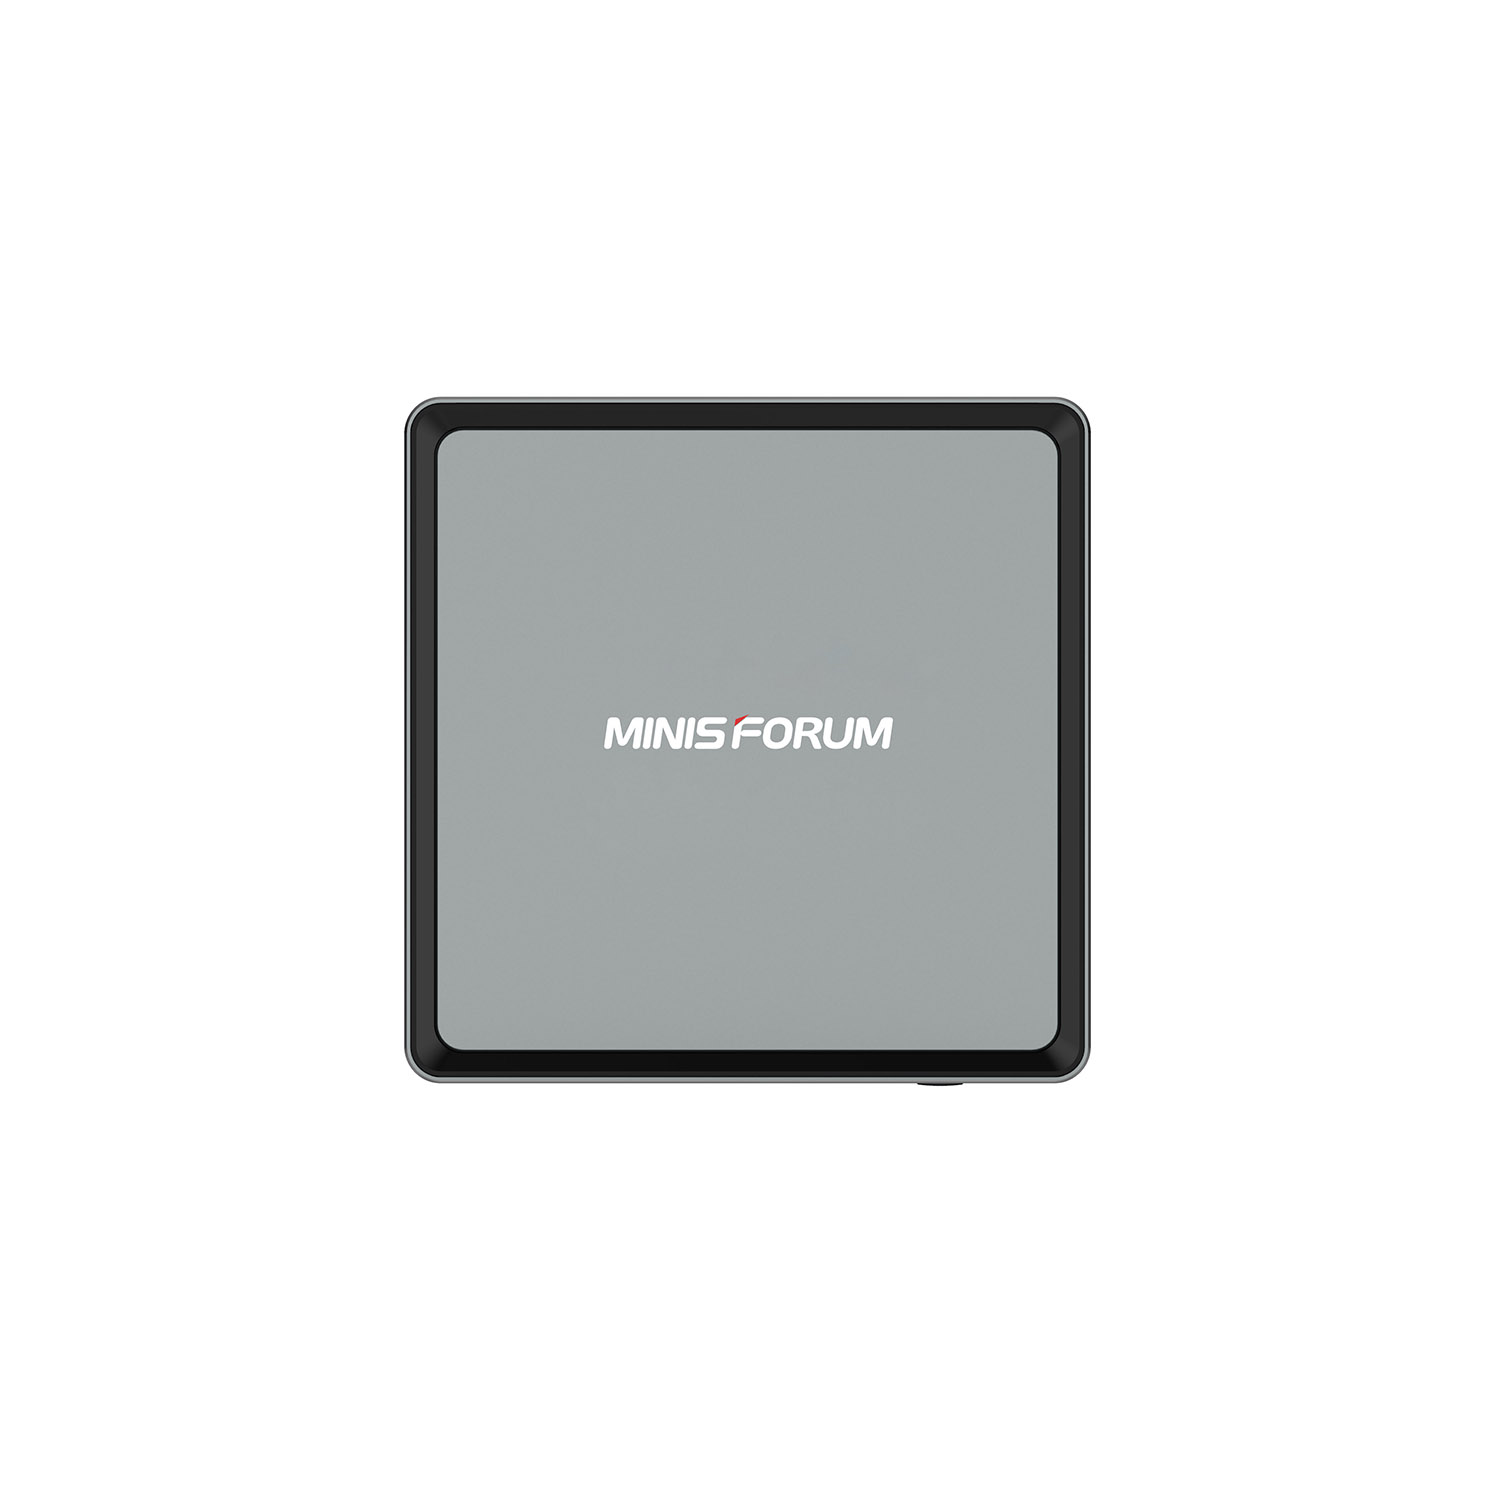 Find Minisforum UM250 Mini PC 8GB DDR4 128GB SSD AMD Ryzen Embedded V1605B Processor Quad Core Windows 10 Pro Dual Band Wi-Fi Bluetooth Support 4K Output for Sale on Gipsybee.com with cryptocurrencies